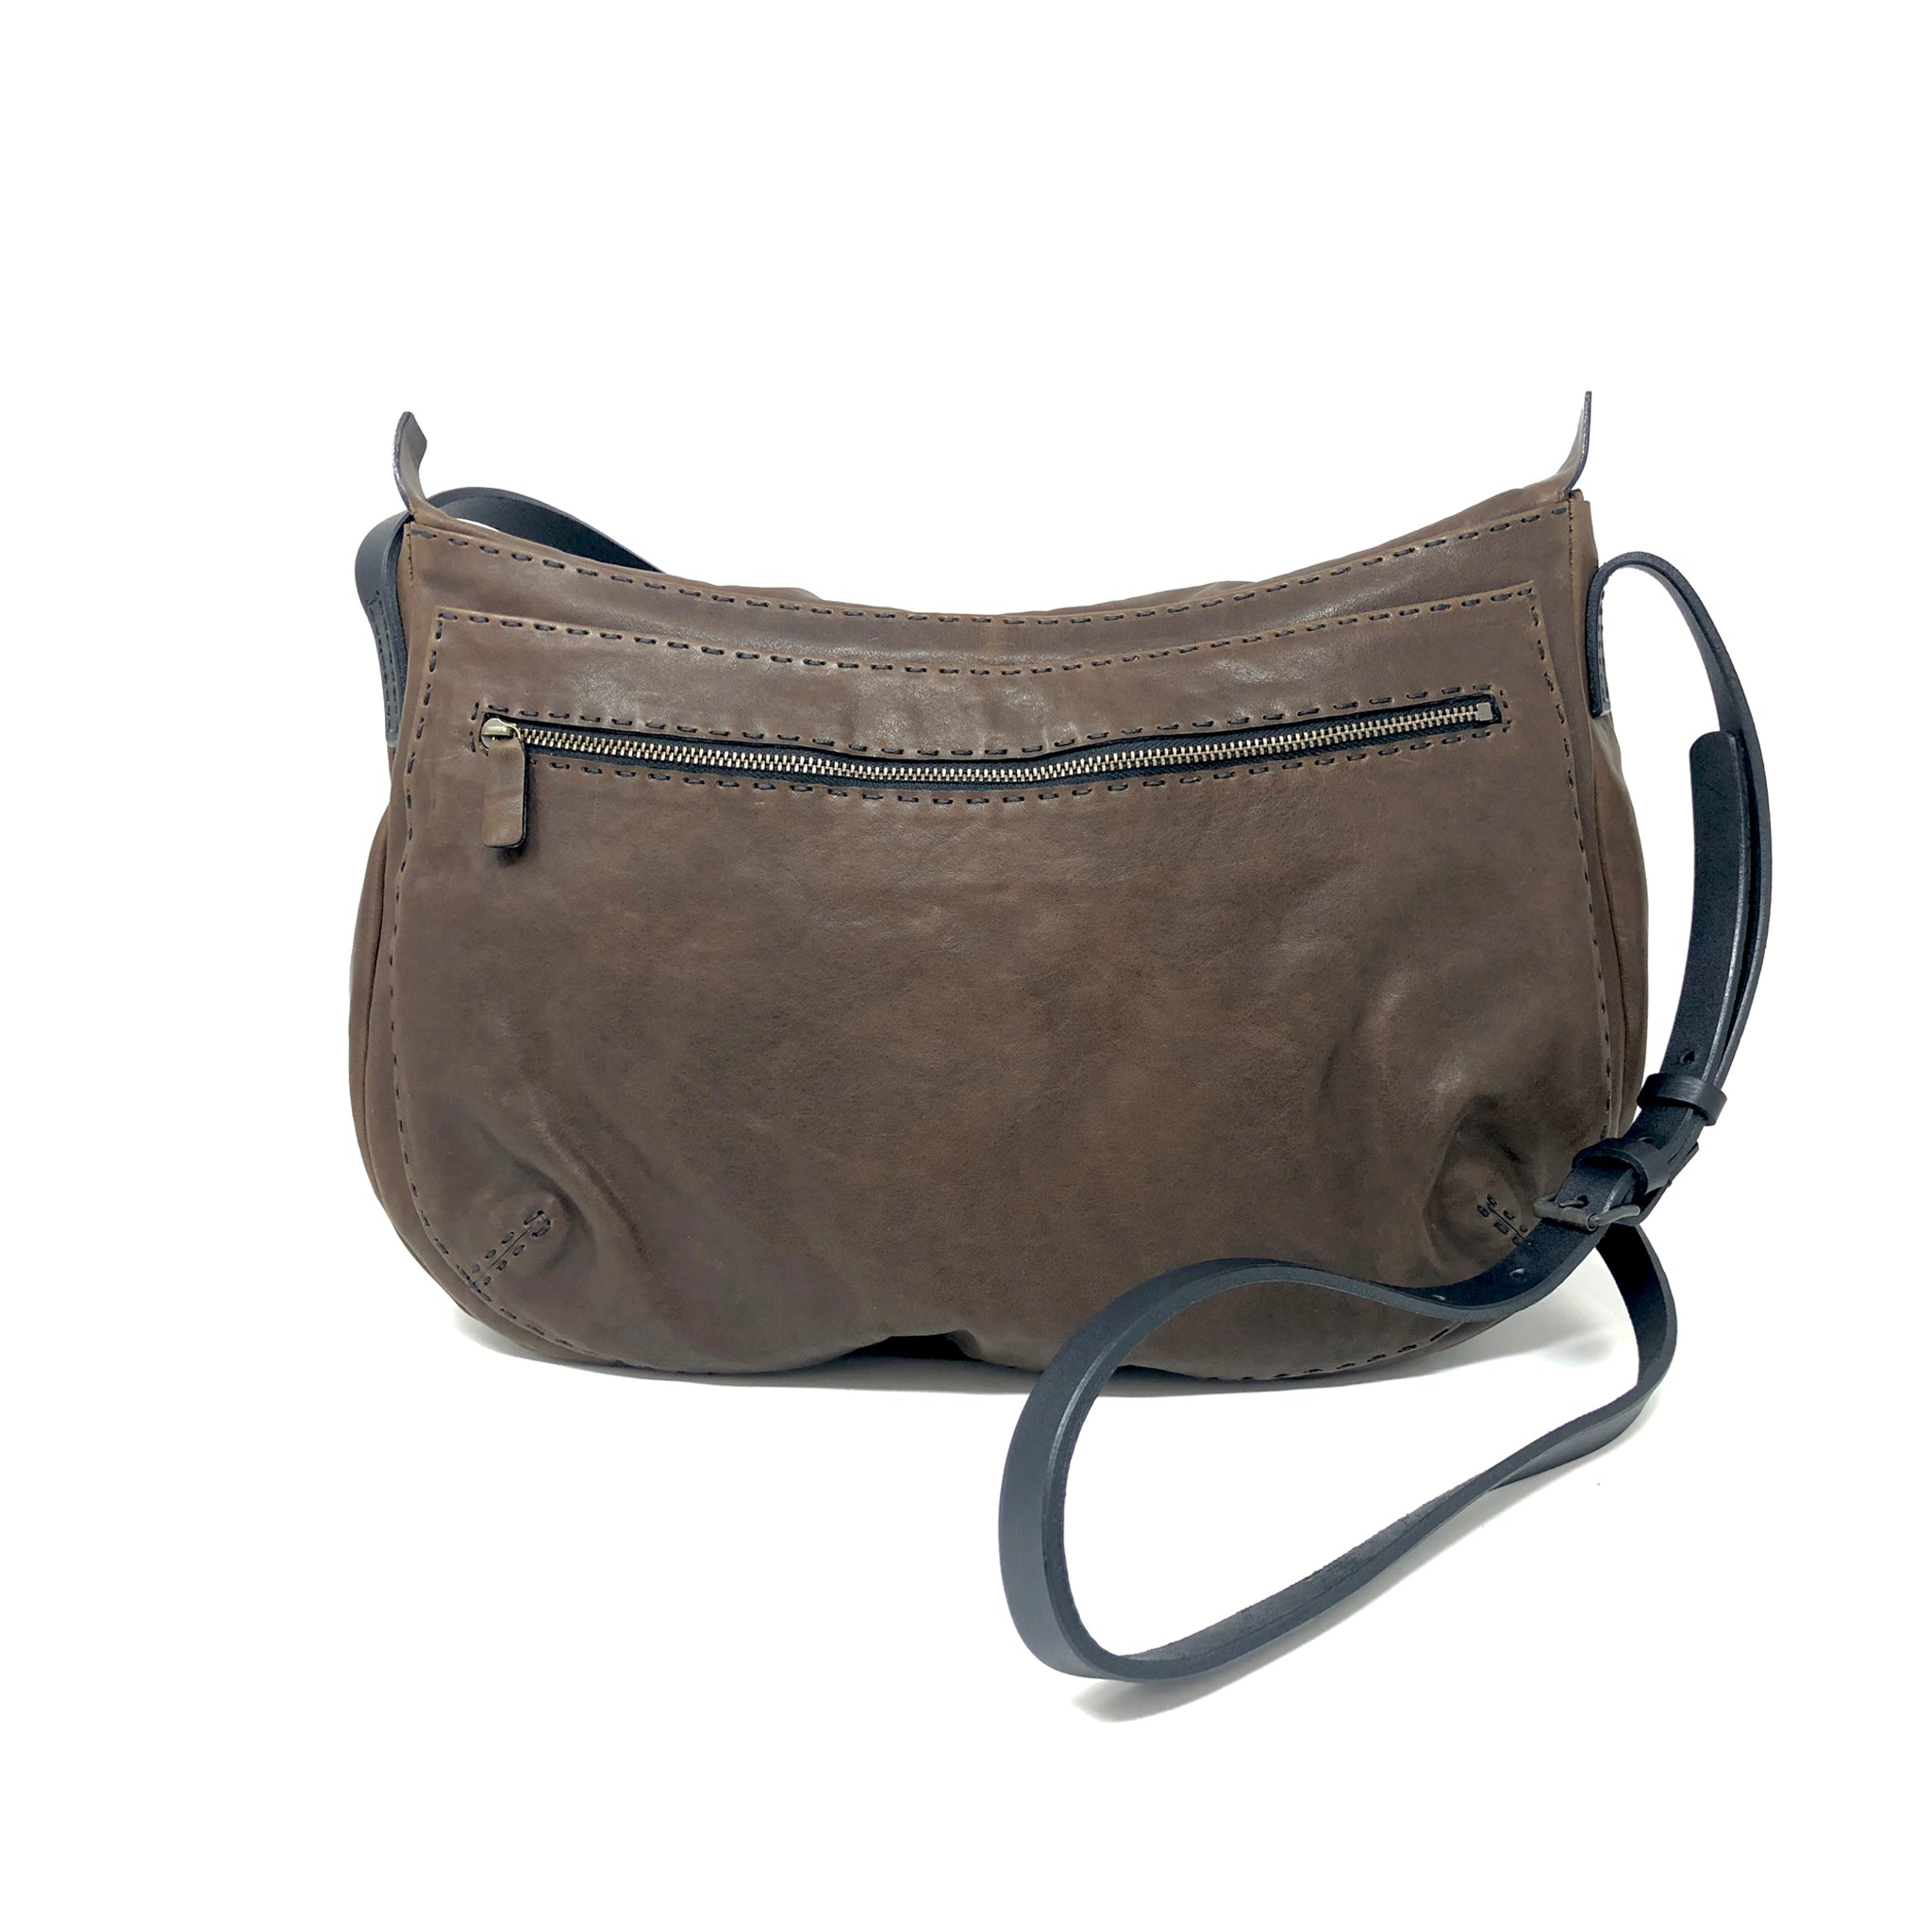 Alba - L Leather Bag